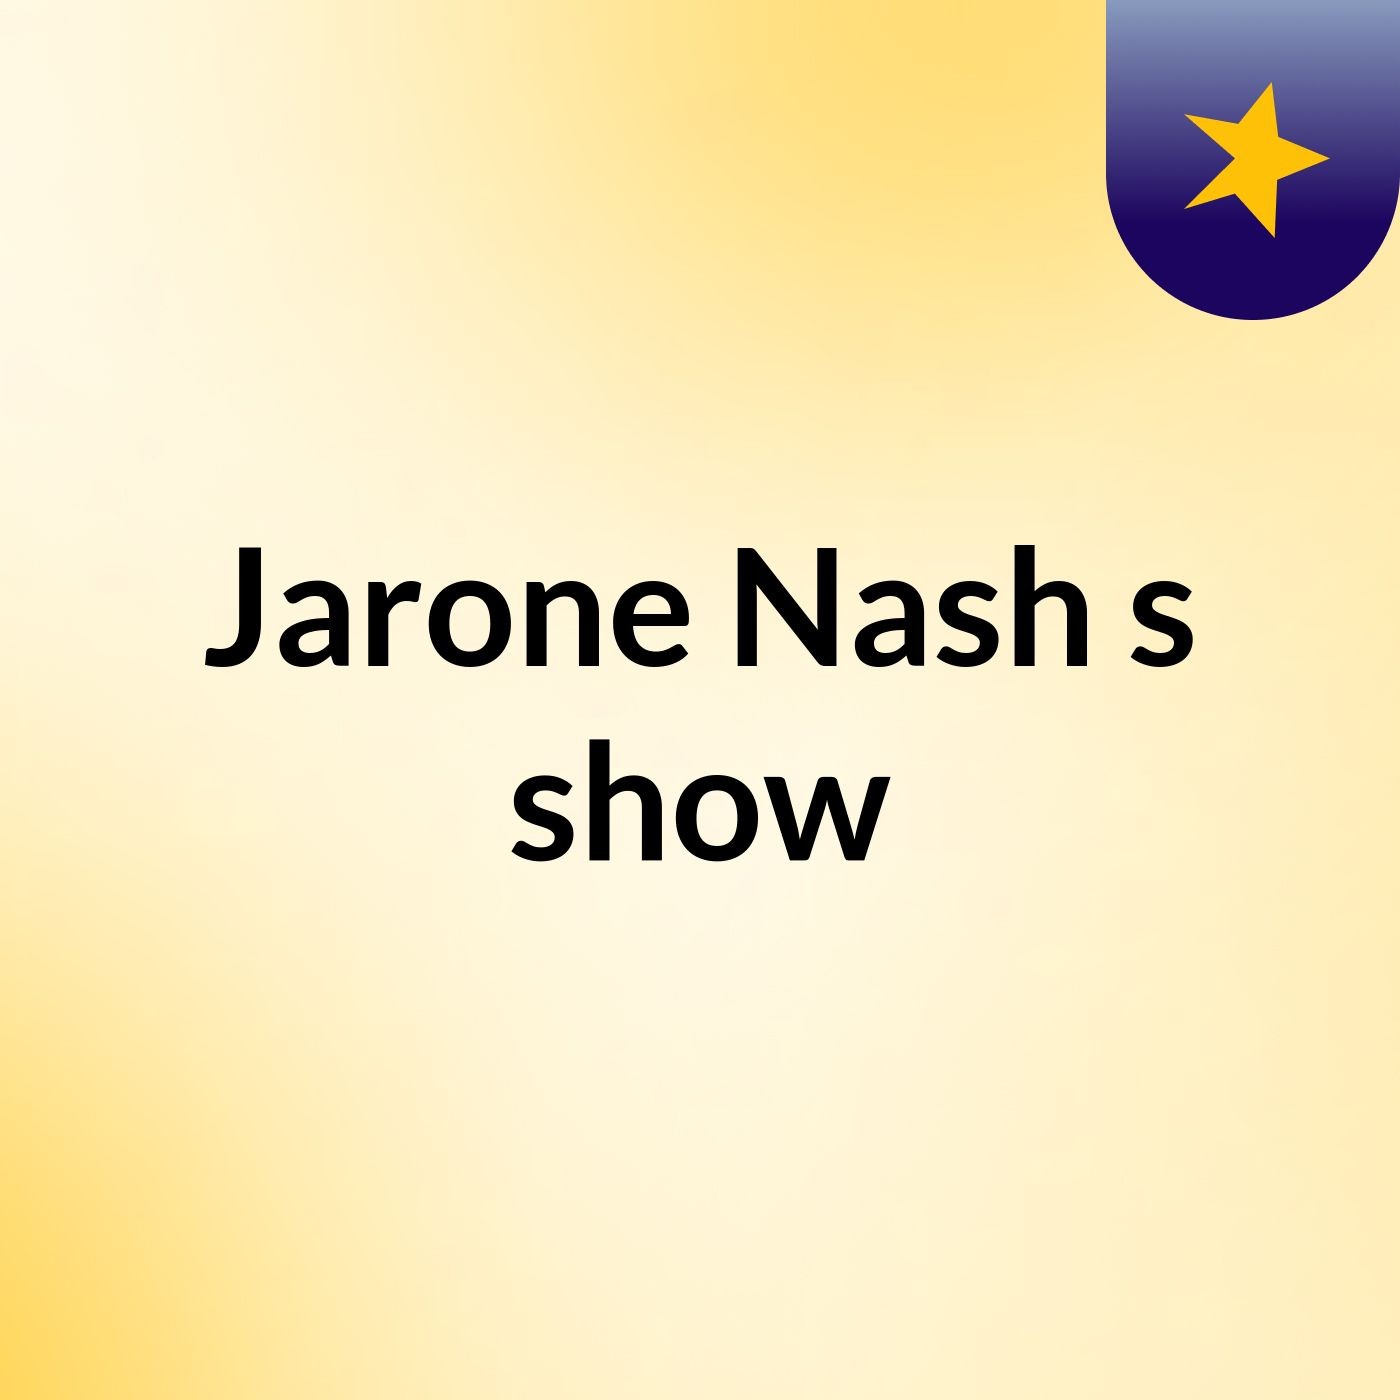 Episode 4 - Jarone Nash's show